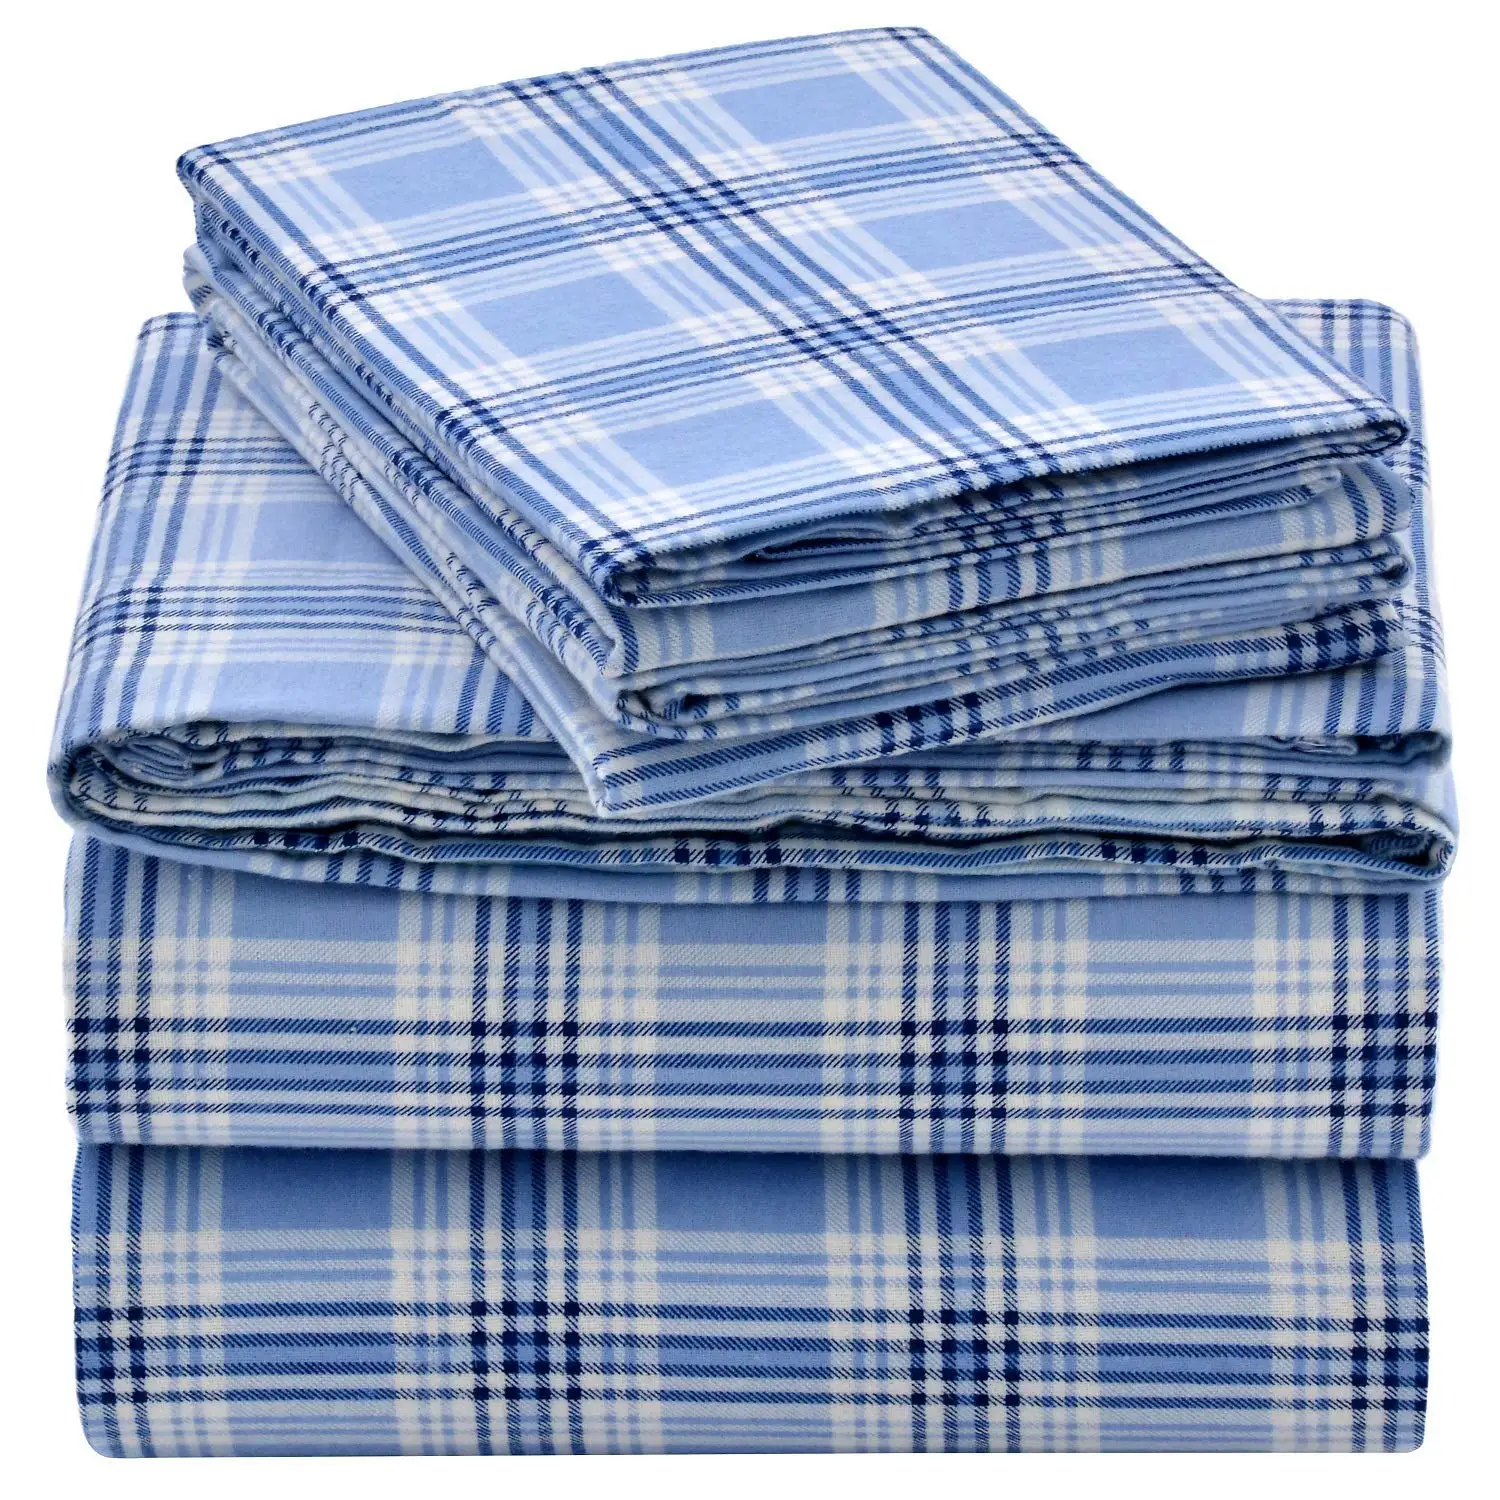 Cheap Plaid Flannel Sheet Sets, find Plaid Flannel Sheet Sets deals on ...